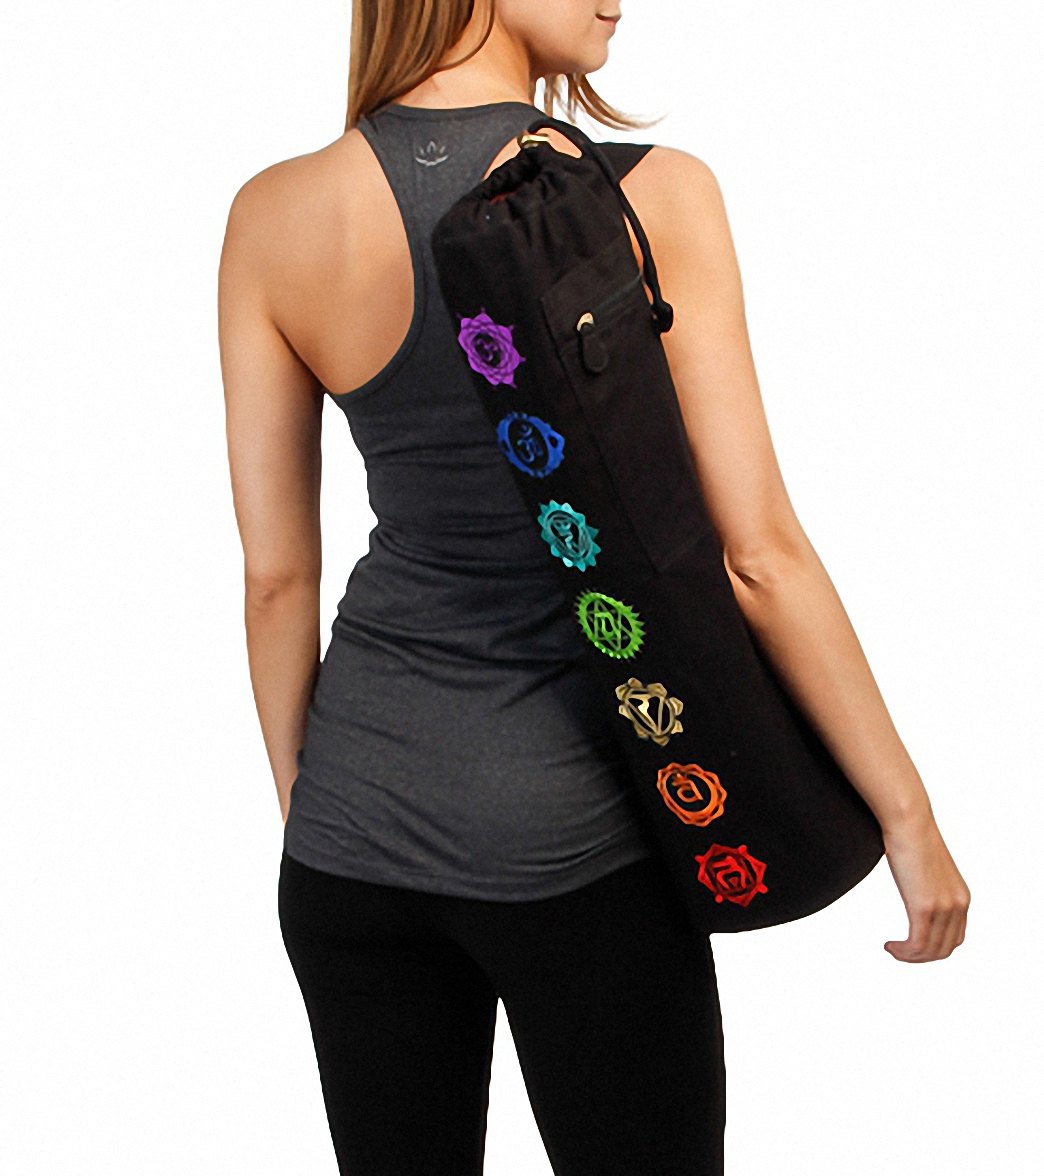 Gaiam Chakra Embroidered Yoga Mat Bag at